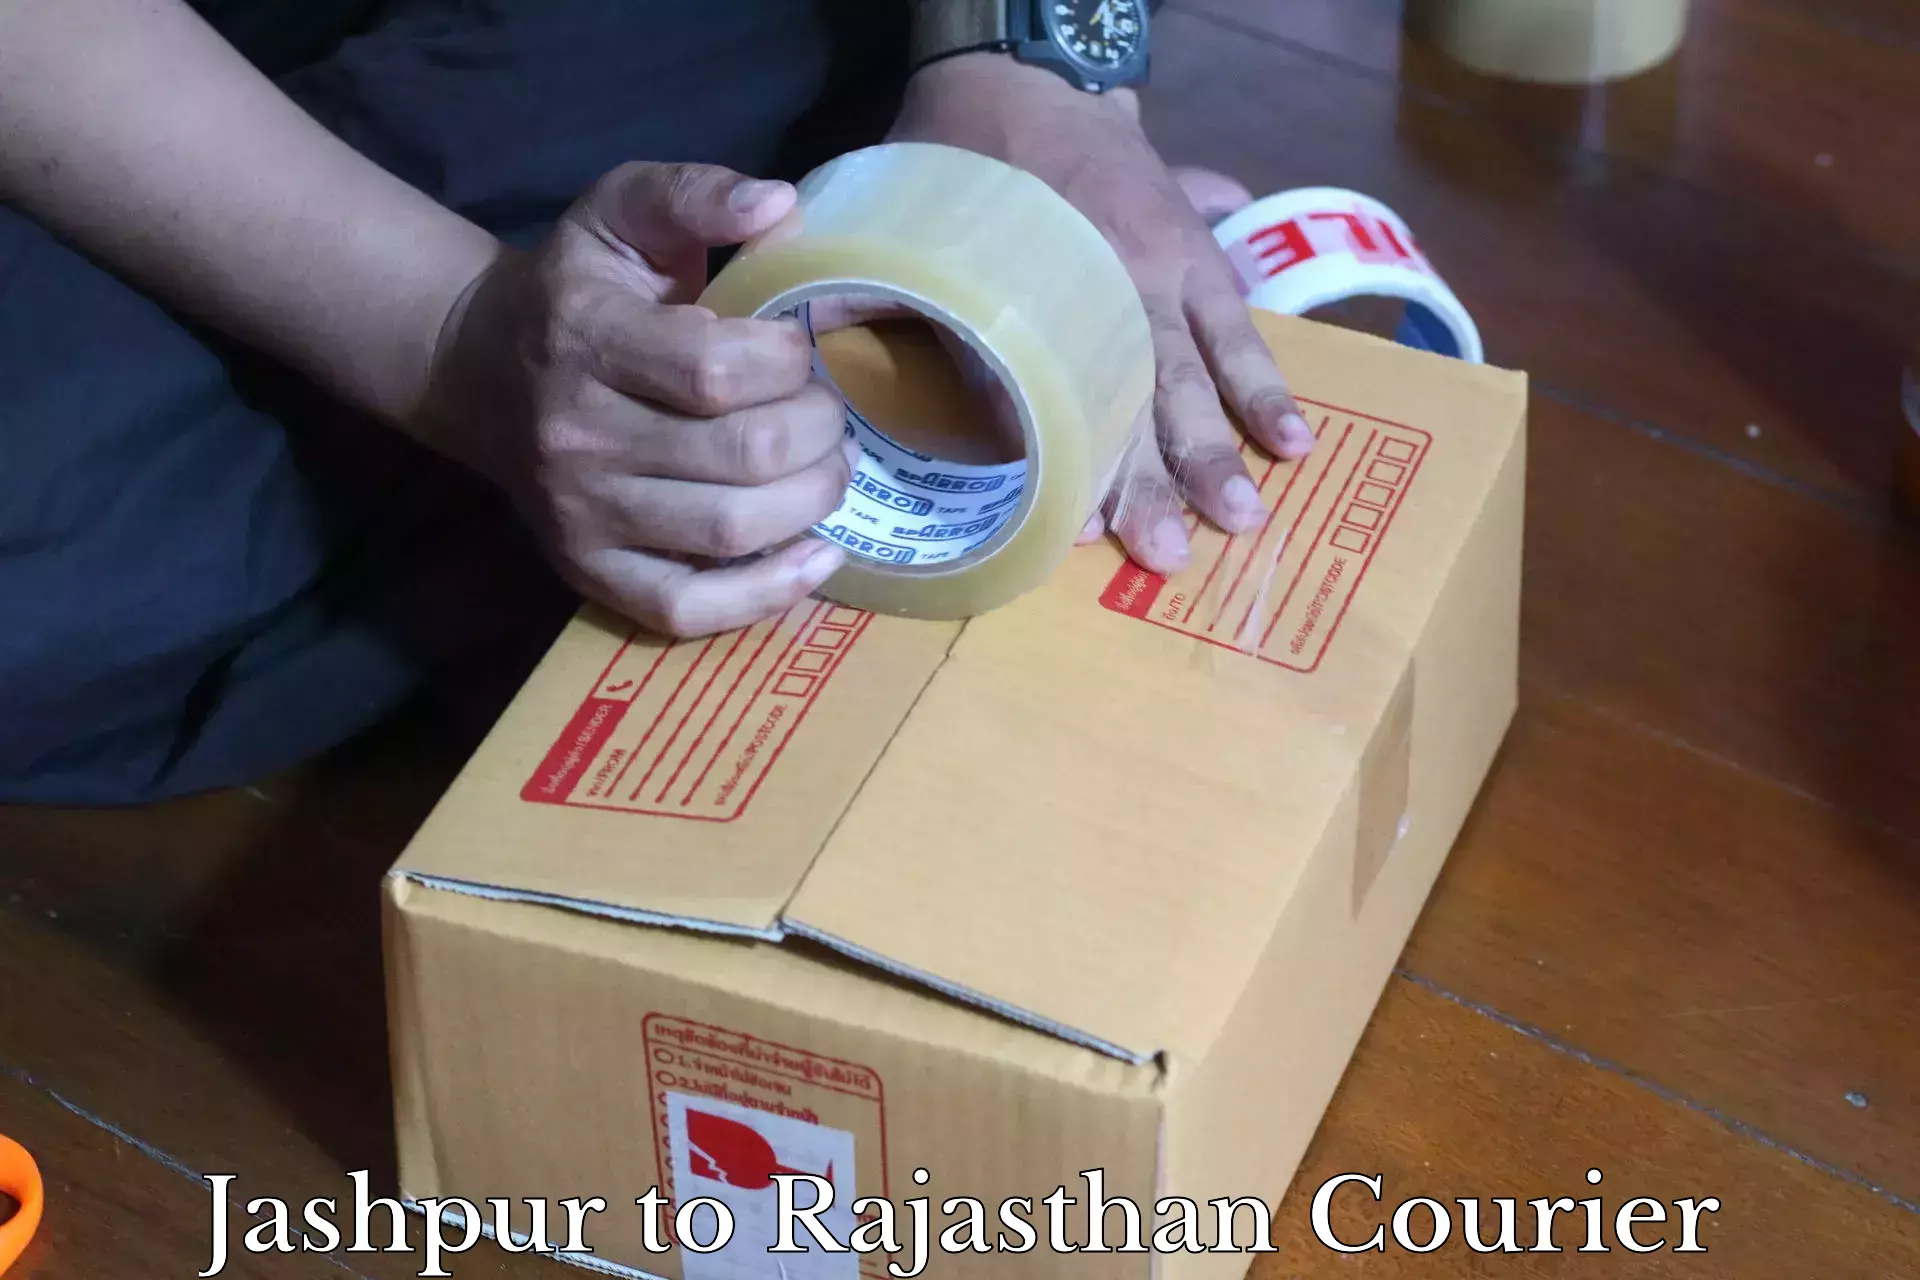 Courier service innovation Jashpur to Kishangarh